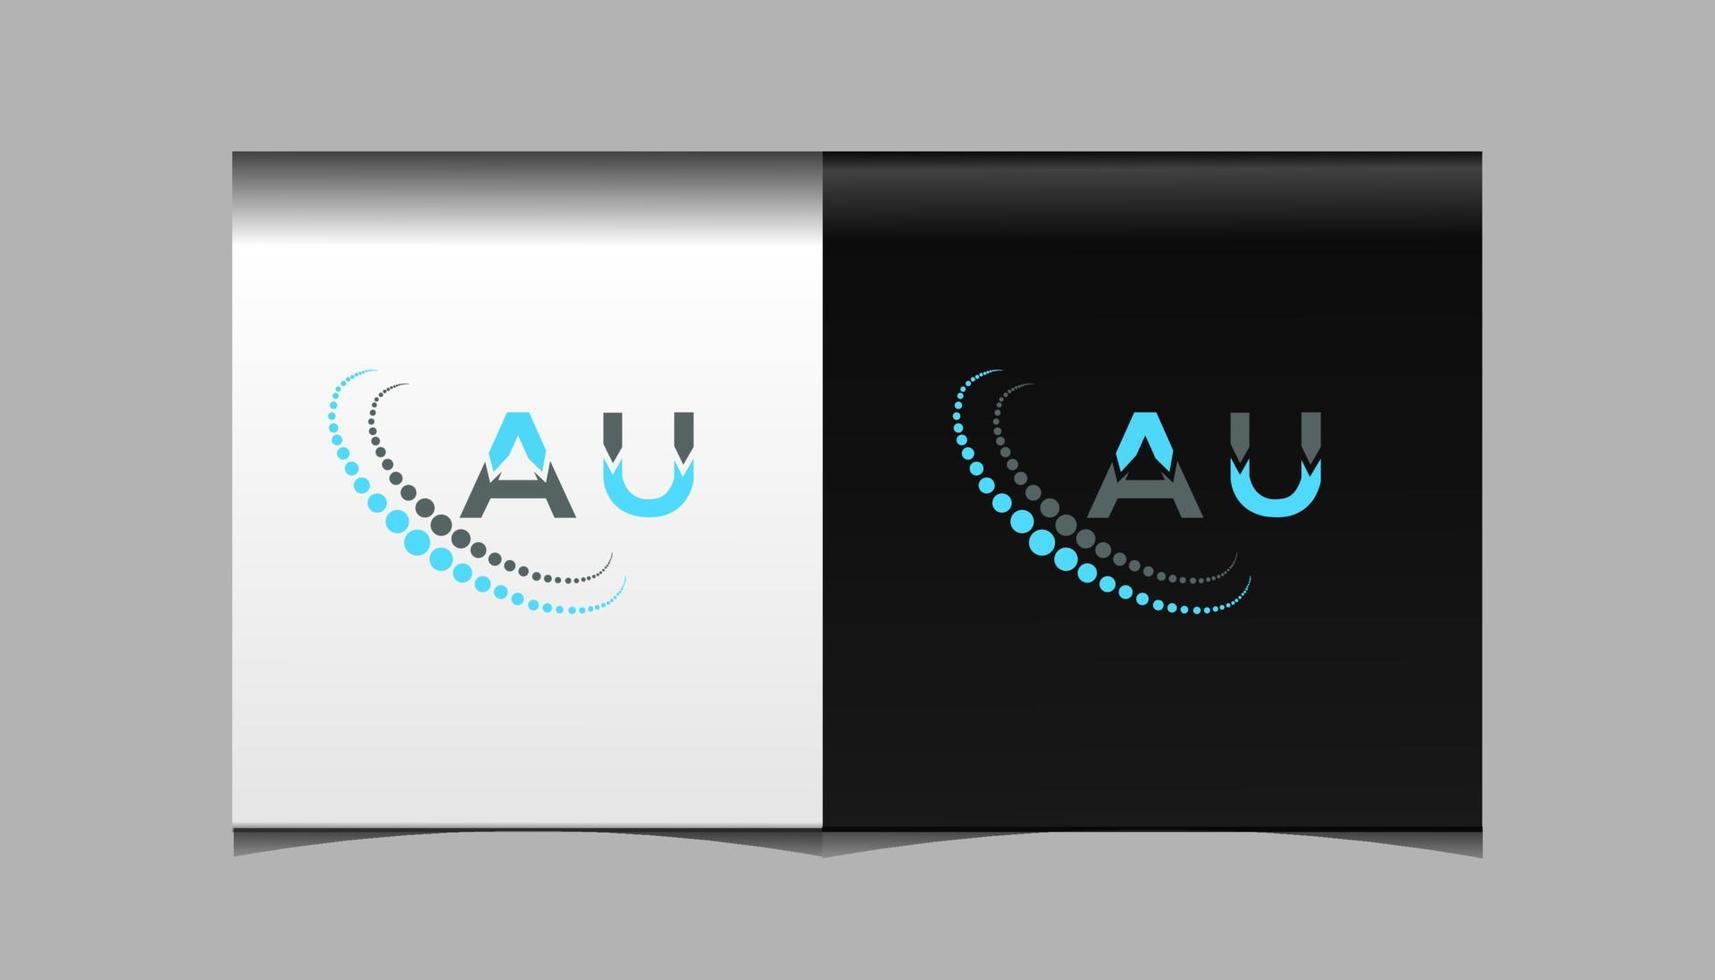 AU letter logo creative design. AU unique design. vector